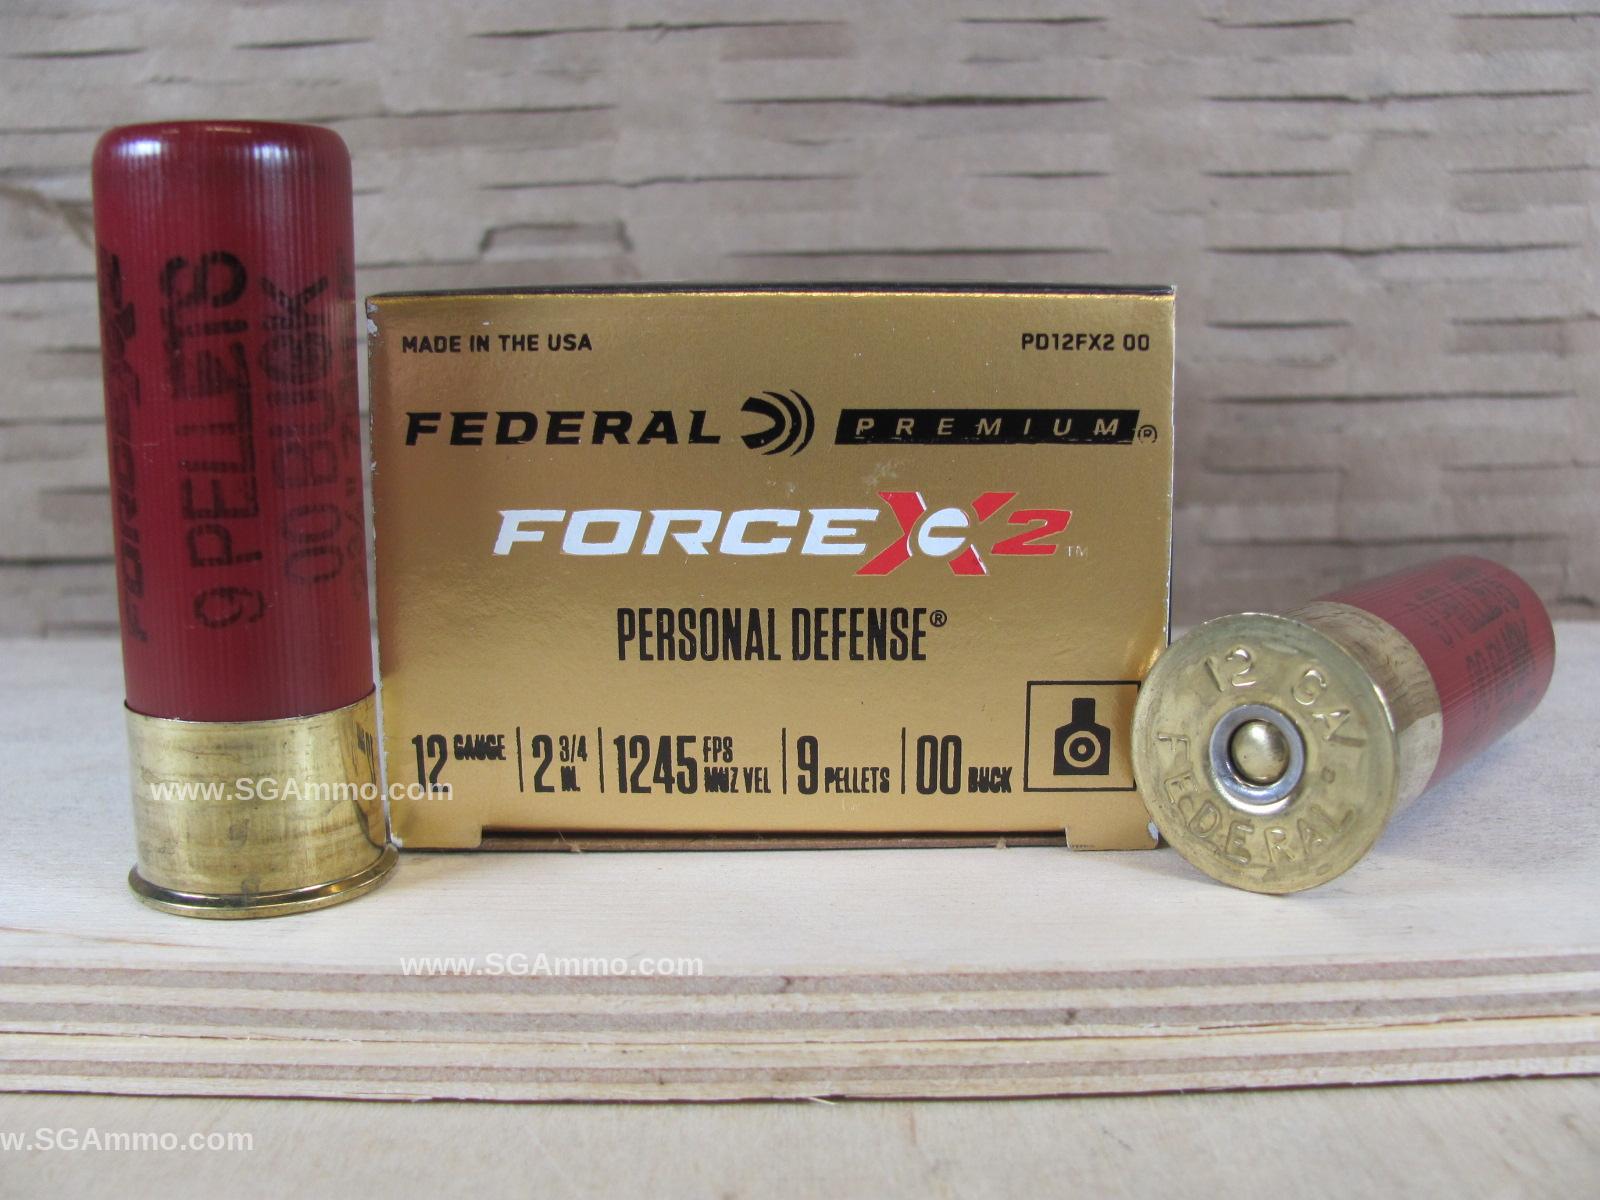 50 Round Brick - 12 Gauge 2.75 Inch 9 Pellet 00 Buck Federal ForceX2 Ammo - PD12FX200